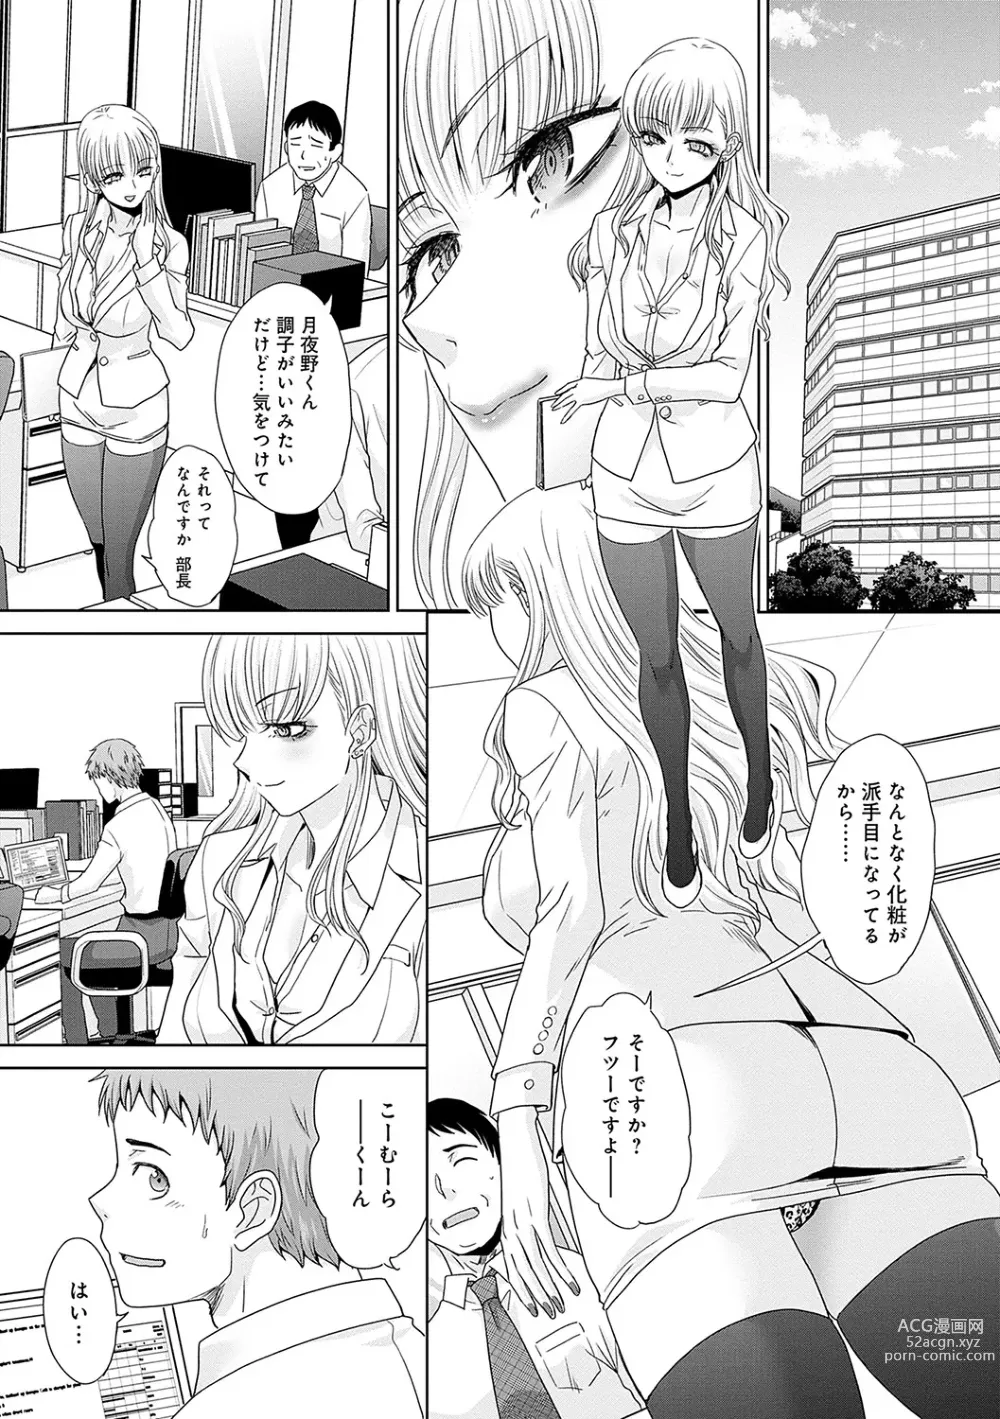 Page 19 of manga Tsukiyono Kachou wa Gal o Yamerarenai  - Tsukiyono The manager cant quit a gal